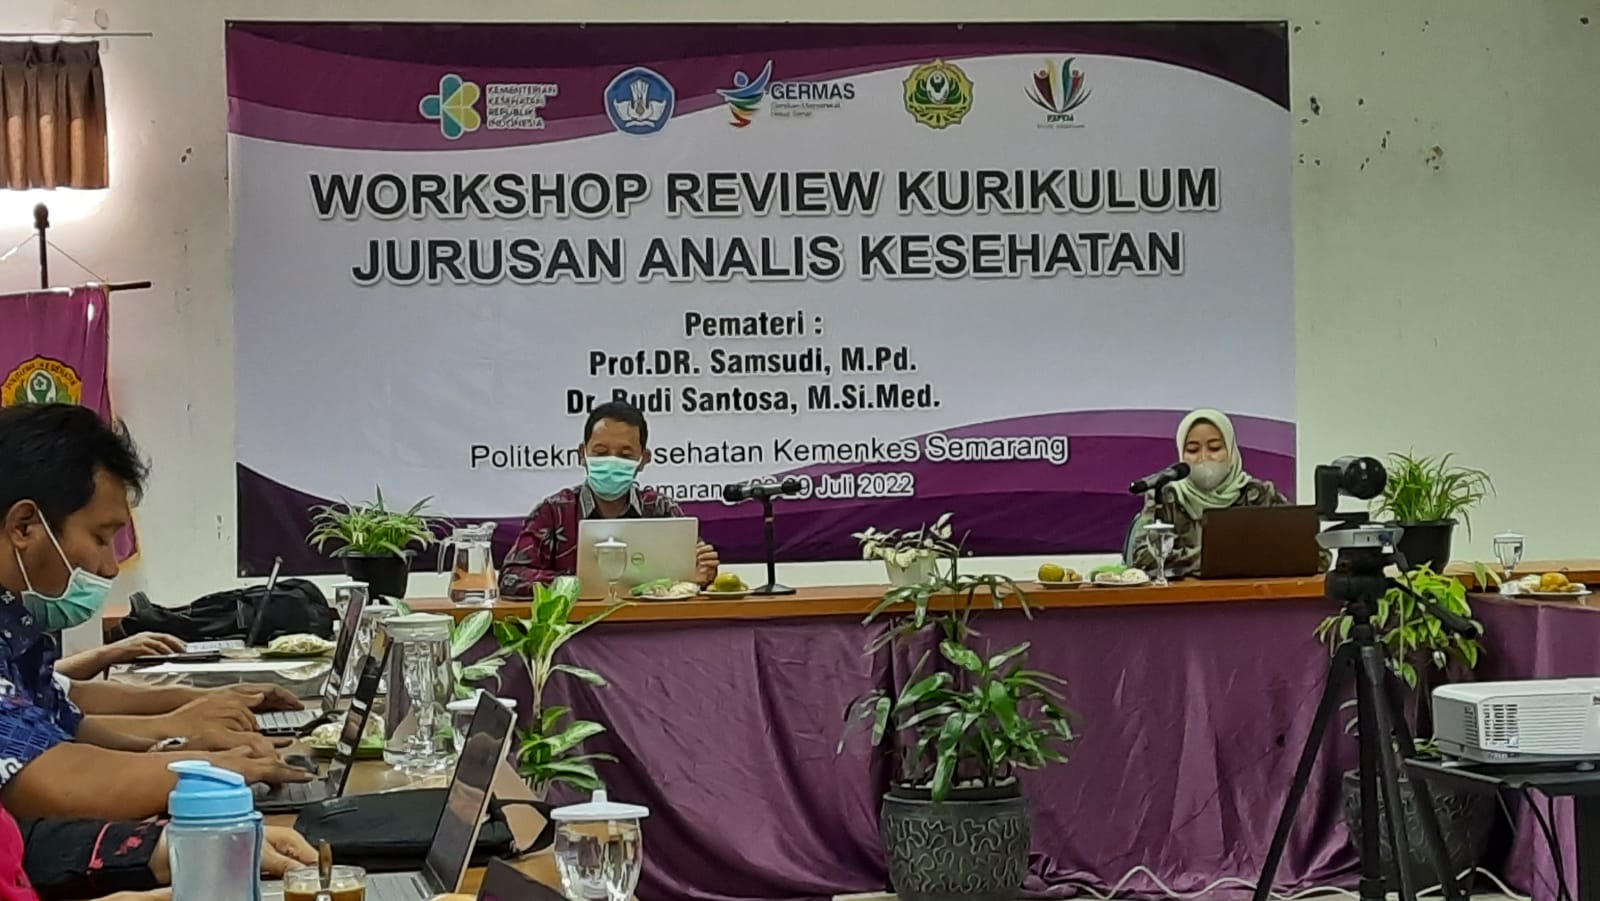 Workshop Review Kurikulum – 28-29 Juli 2022